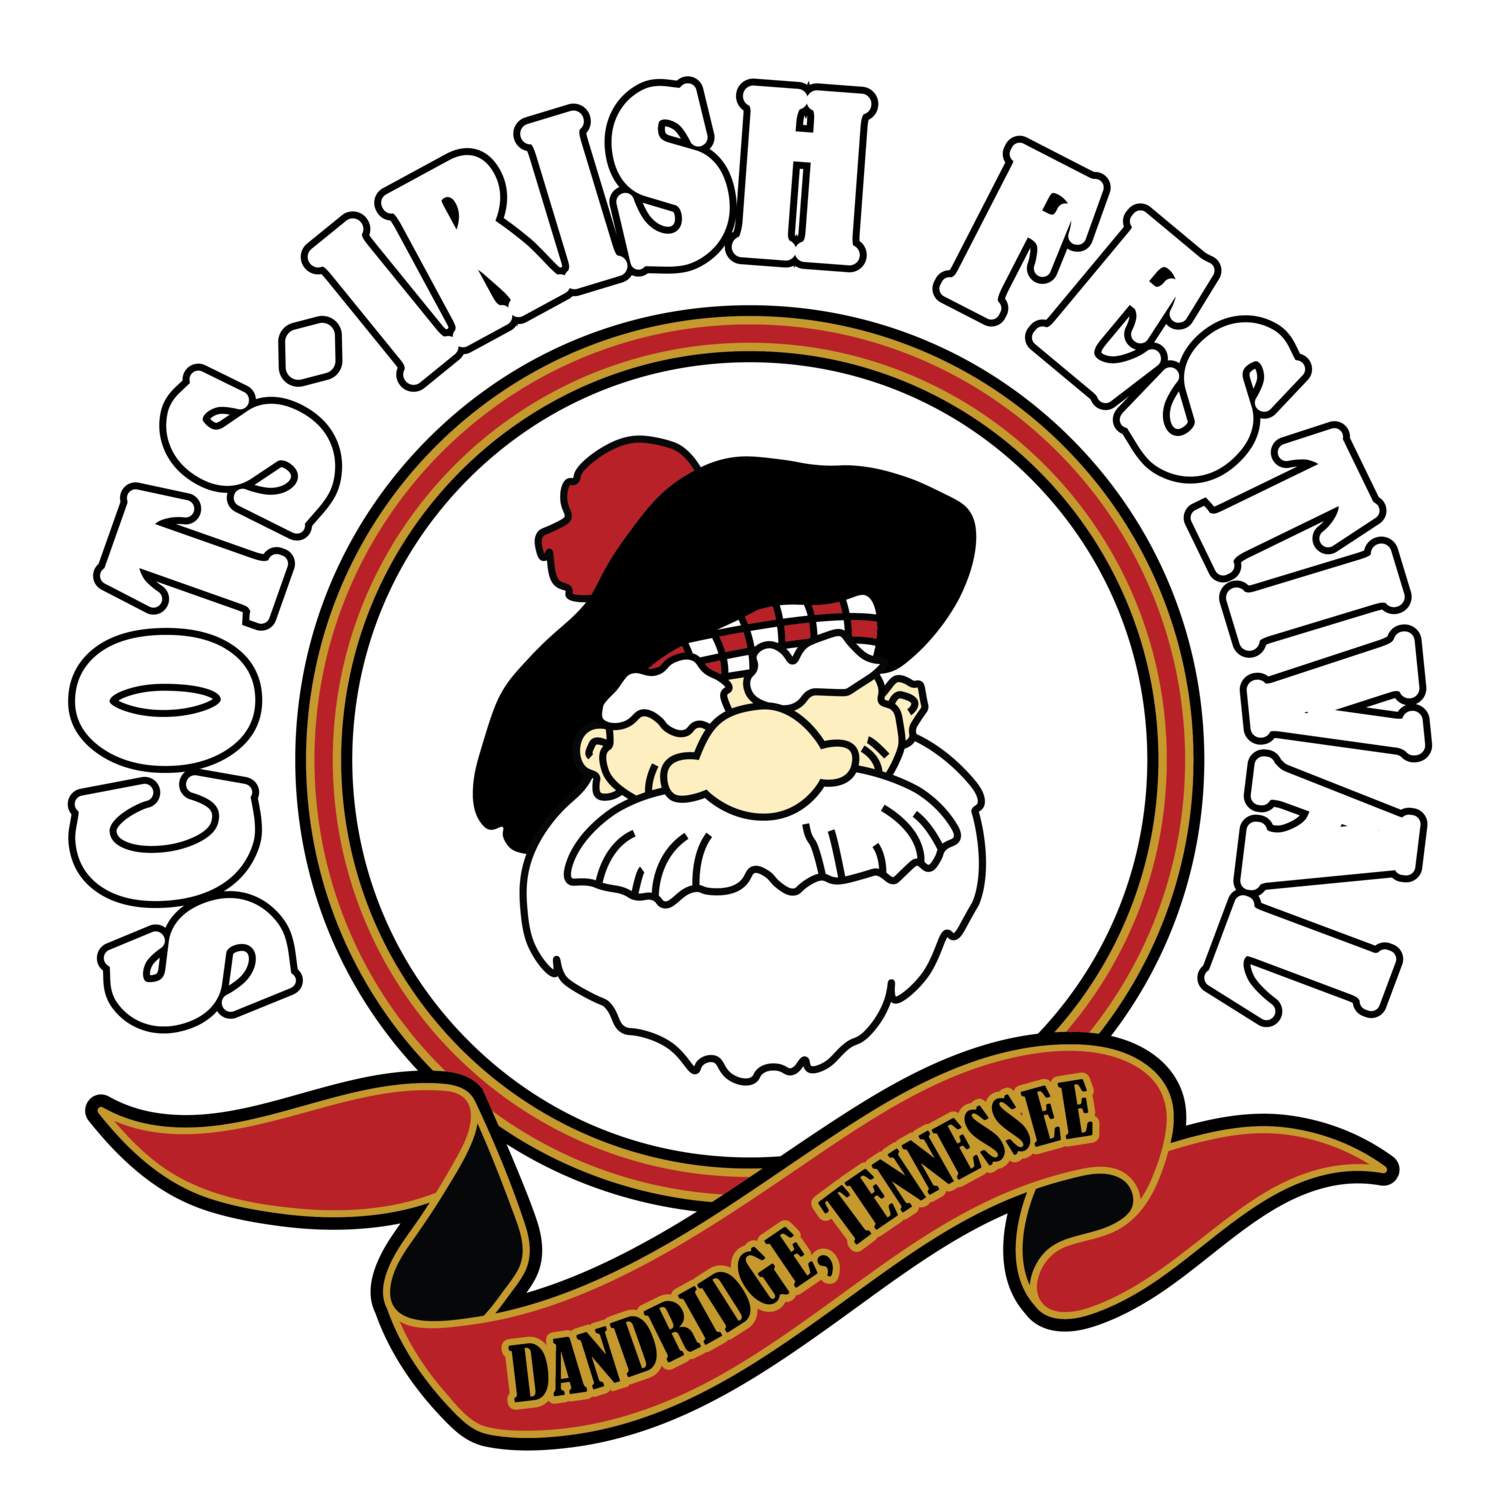 2017 Dandridge Scots-Irish Festival